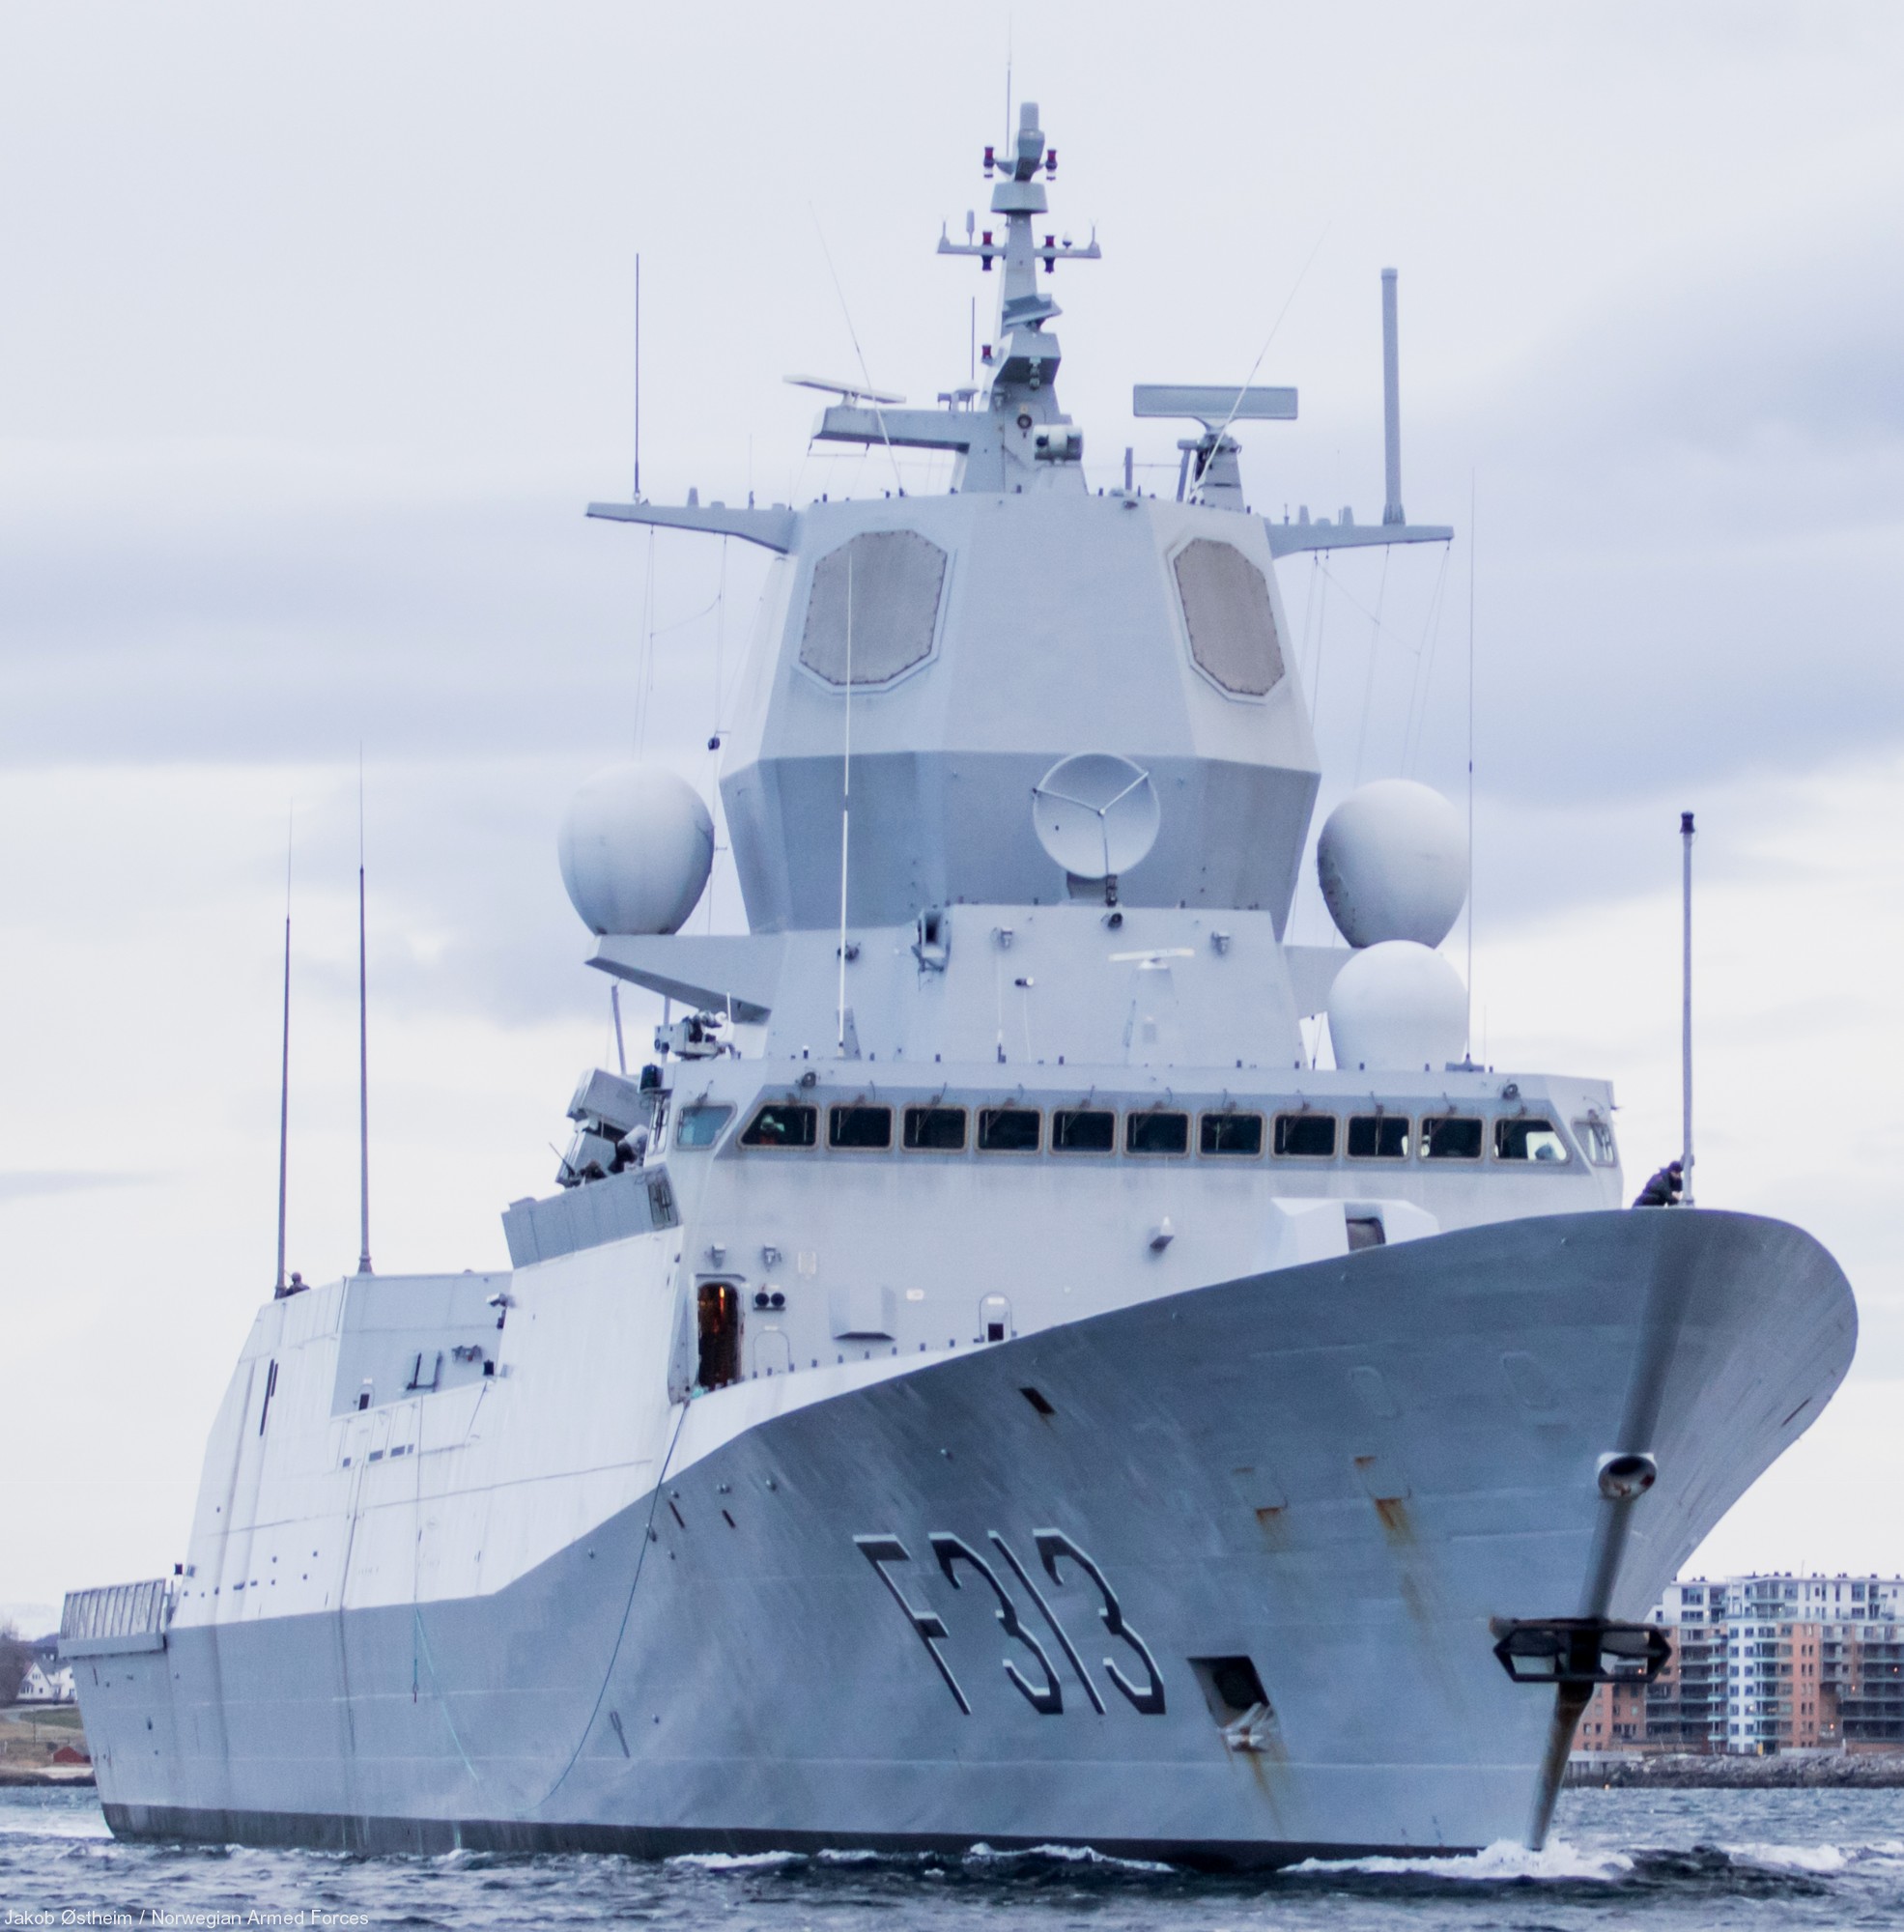 f-313 helge ingstad hnoms knm nansen class frigate royal norwegian navy 25